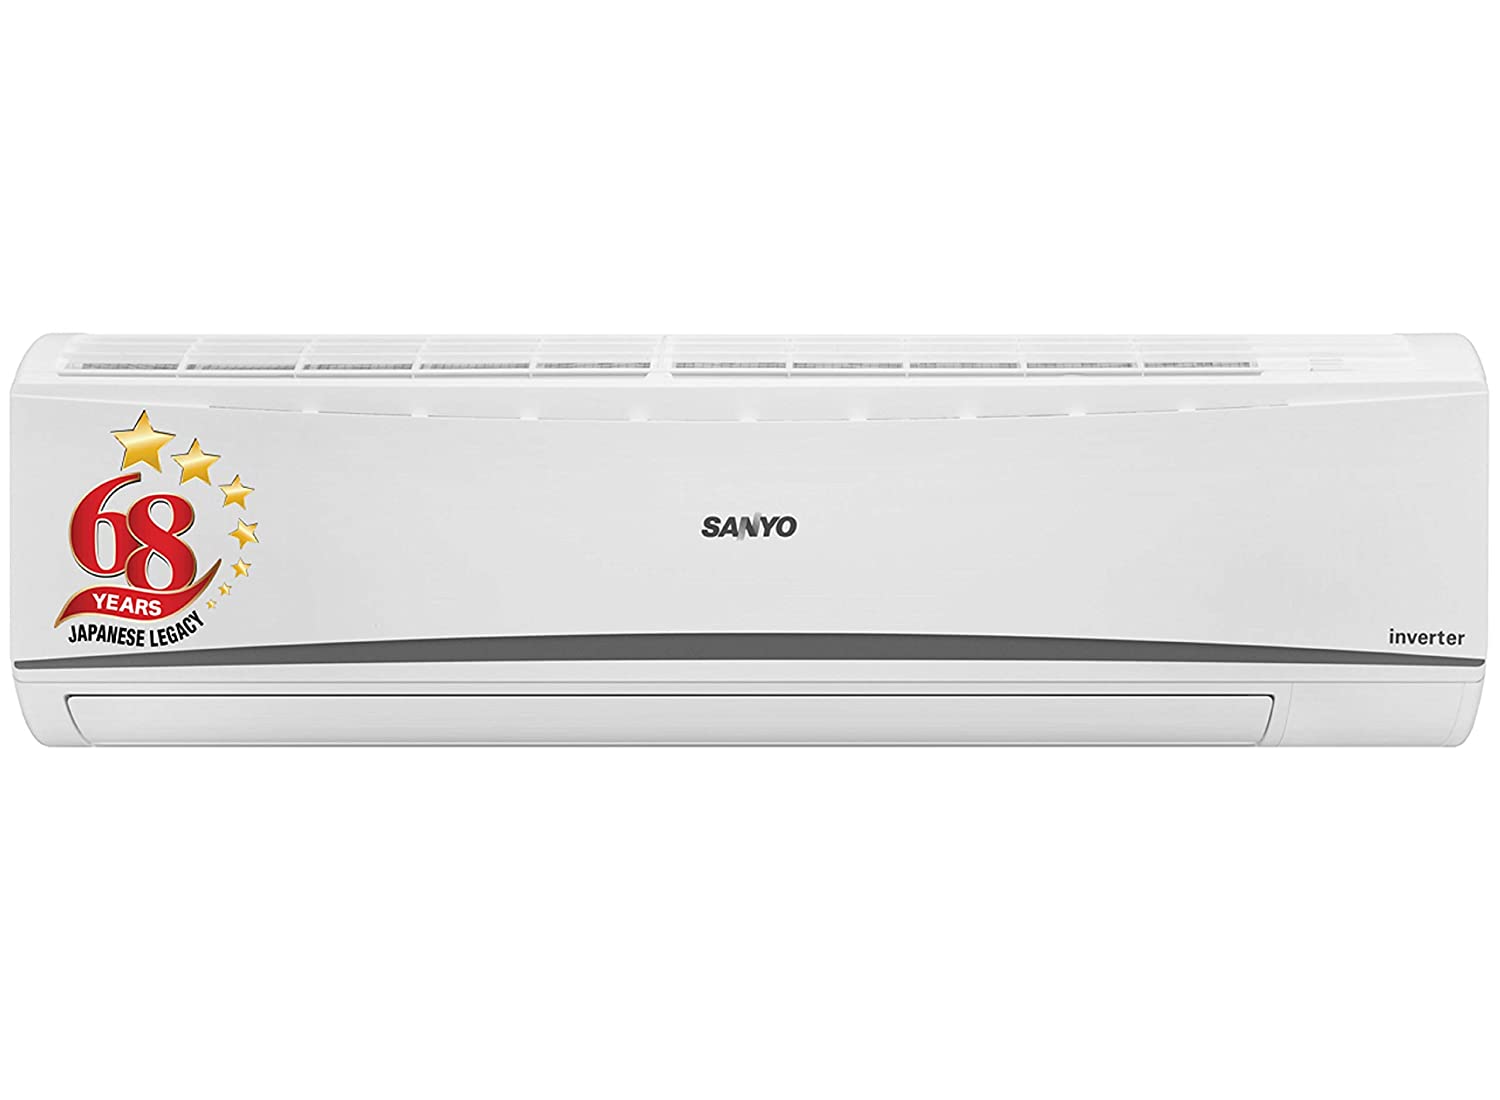 Sanyo 1.5 Ton 3 Star Dual Inverter Split AC (Copper, PM 2.5 Filter, 2020 Model, SI/SO-15T3SCIC White)